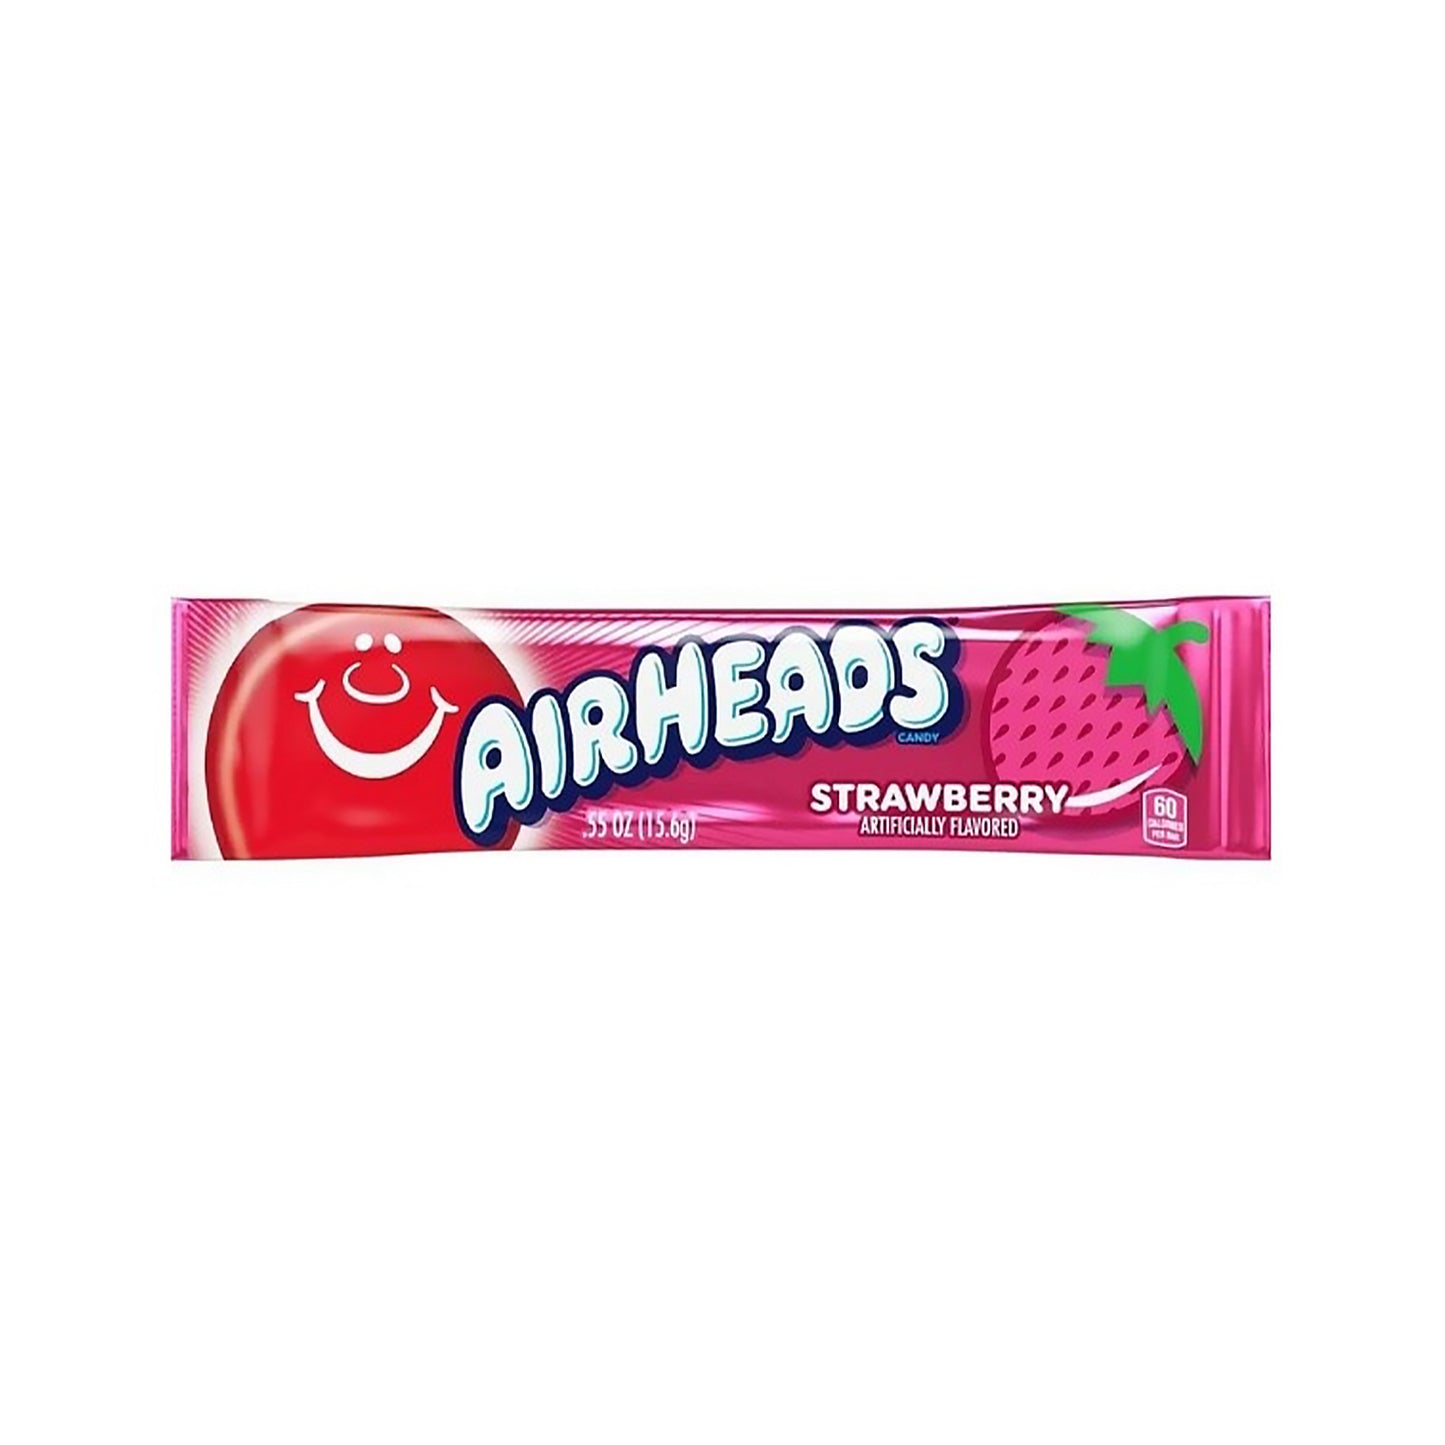 Airheads Strawberry